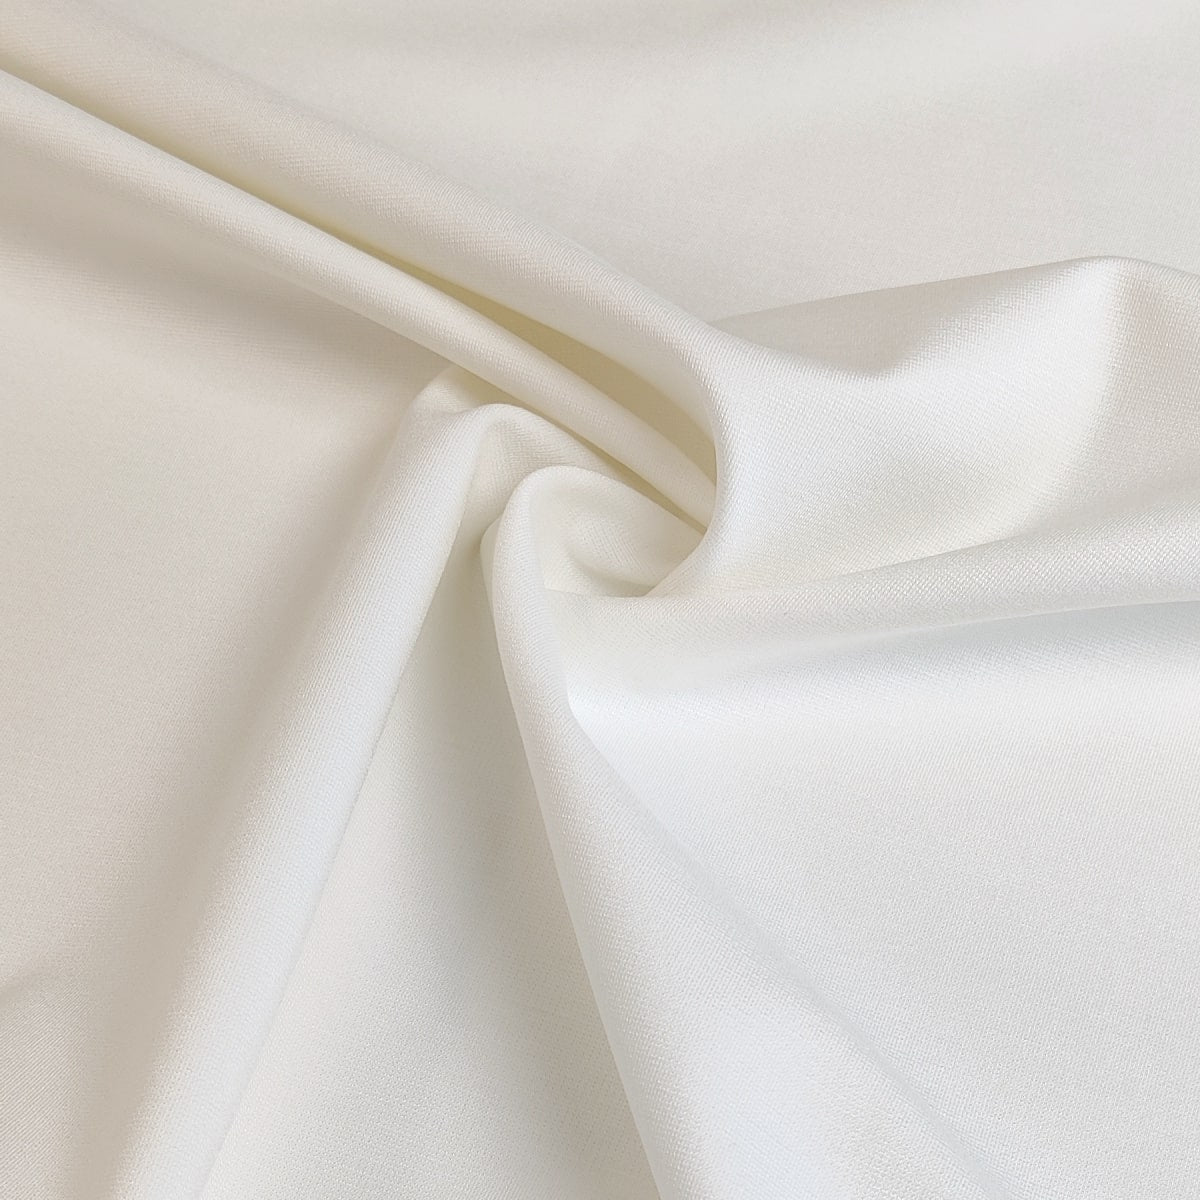 Nylon ponte de roma fabric white, cream